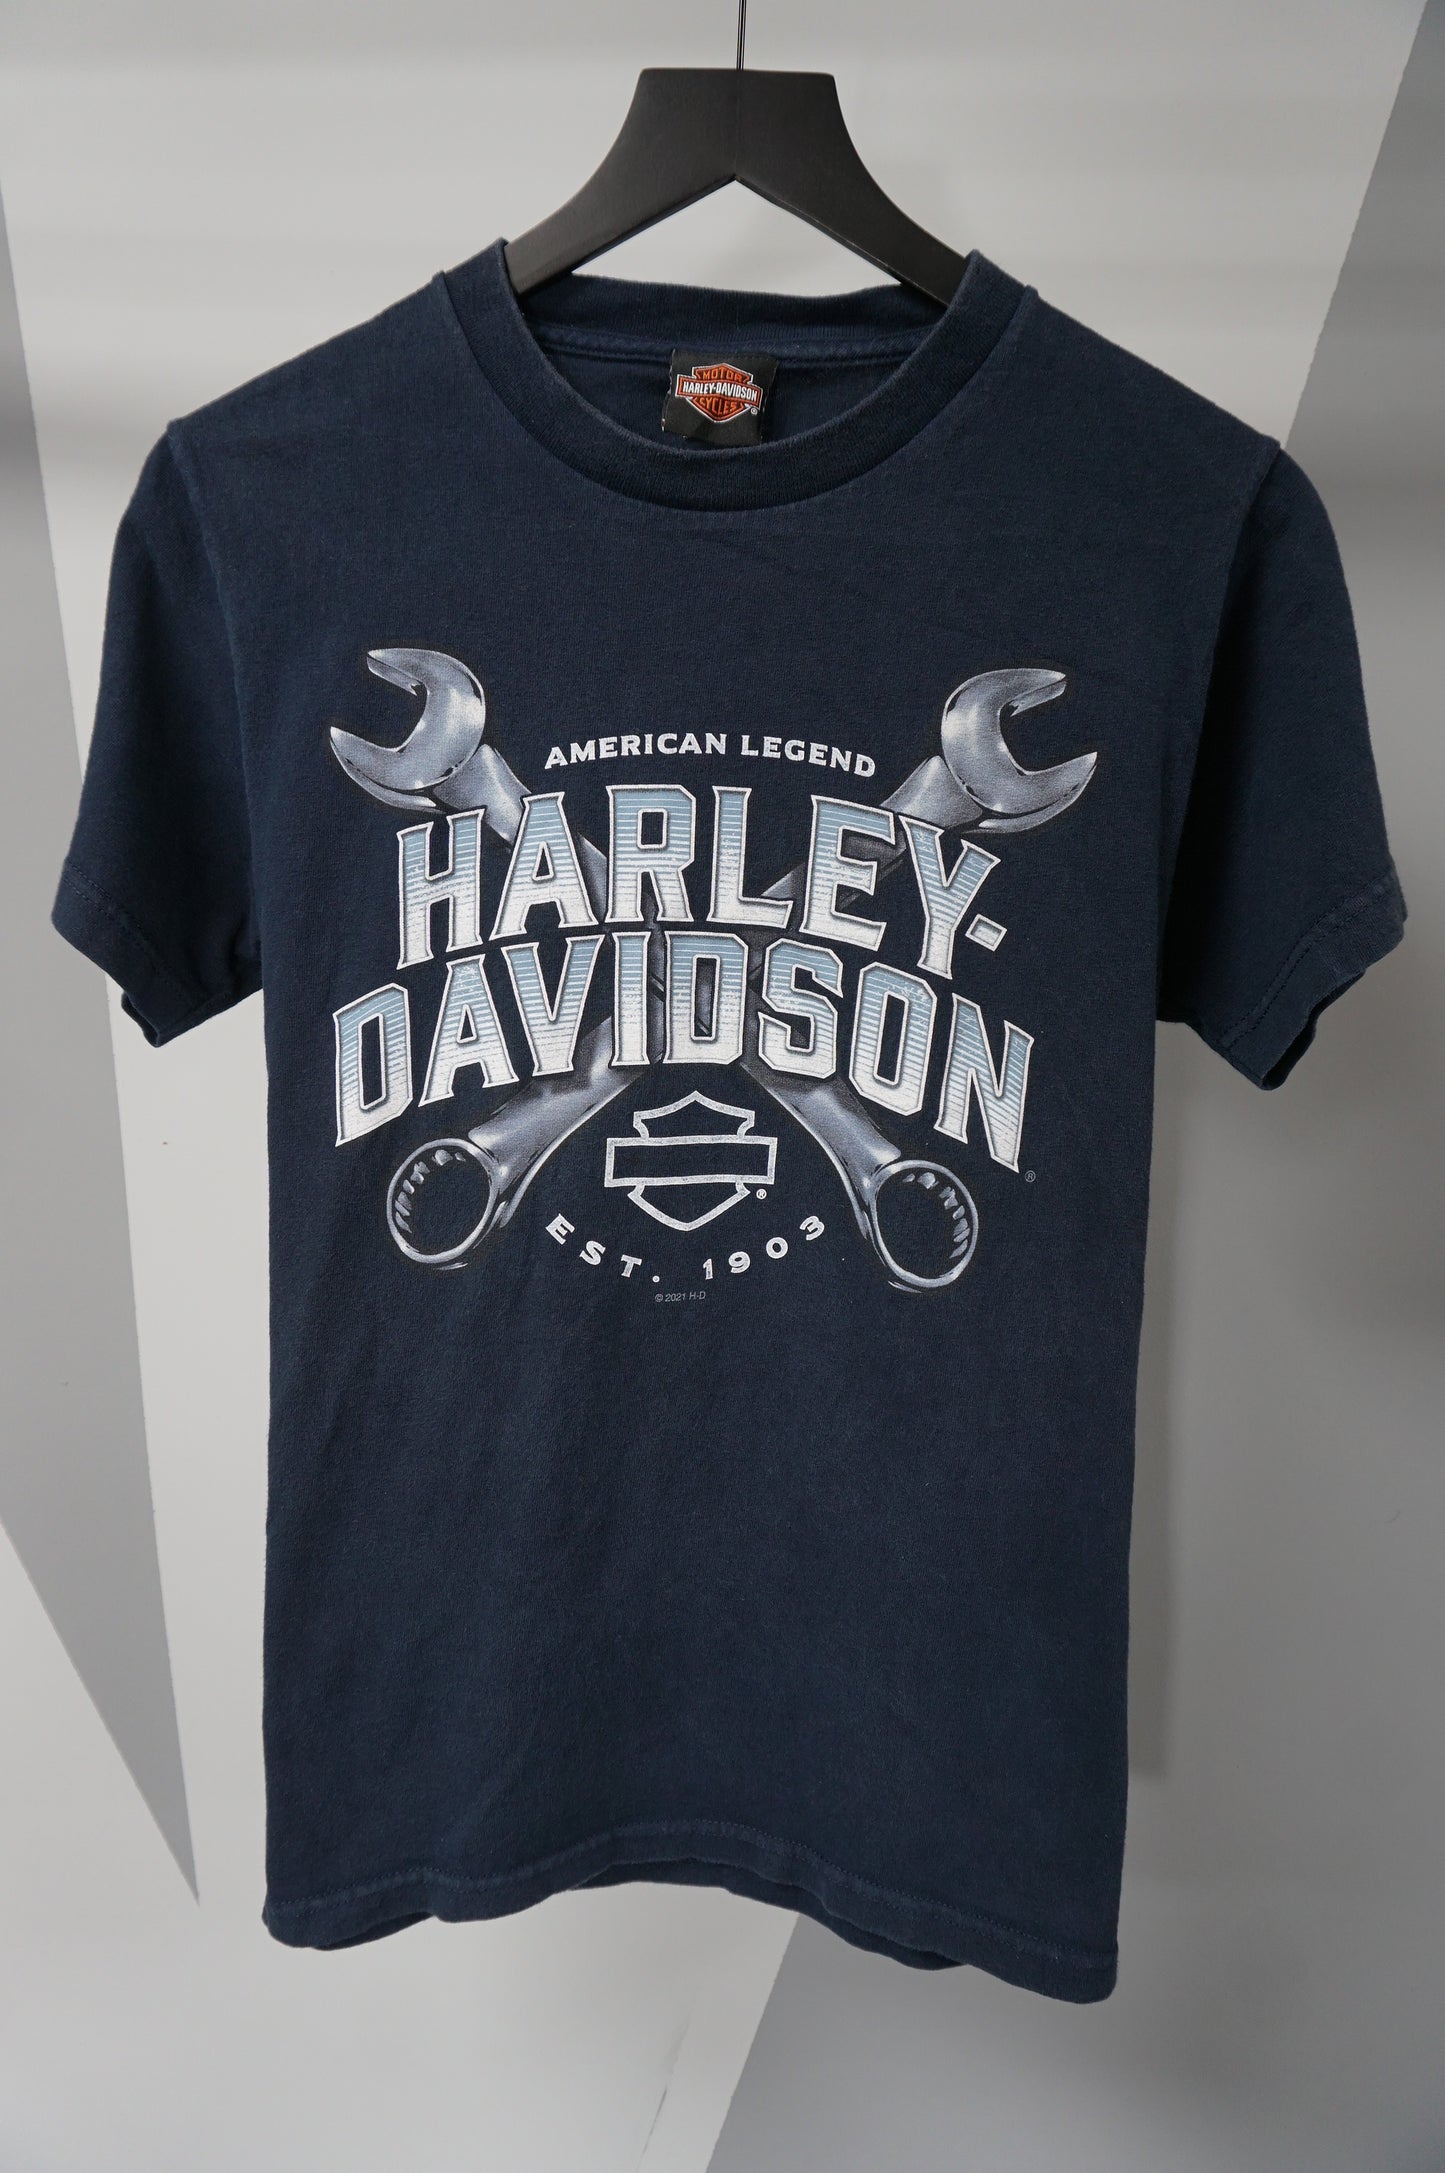 (S) Chattanooga Harley Davidson T-Shirt